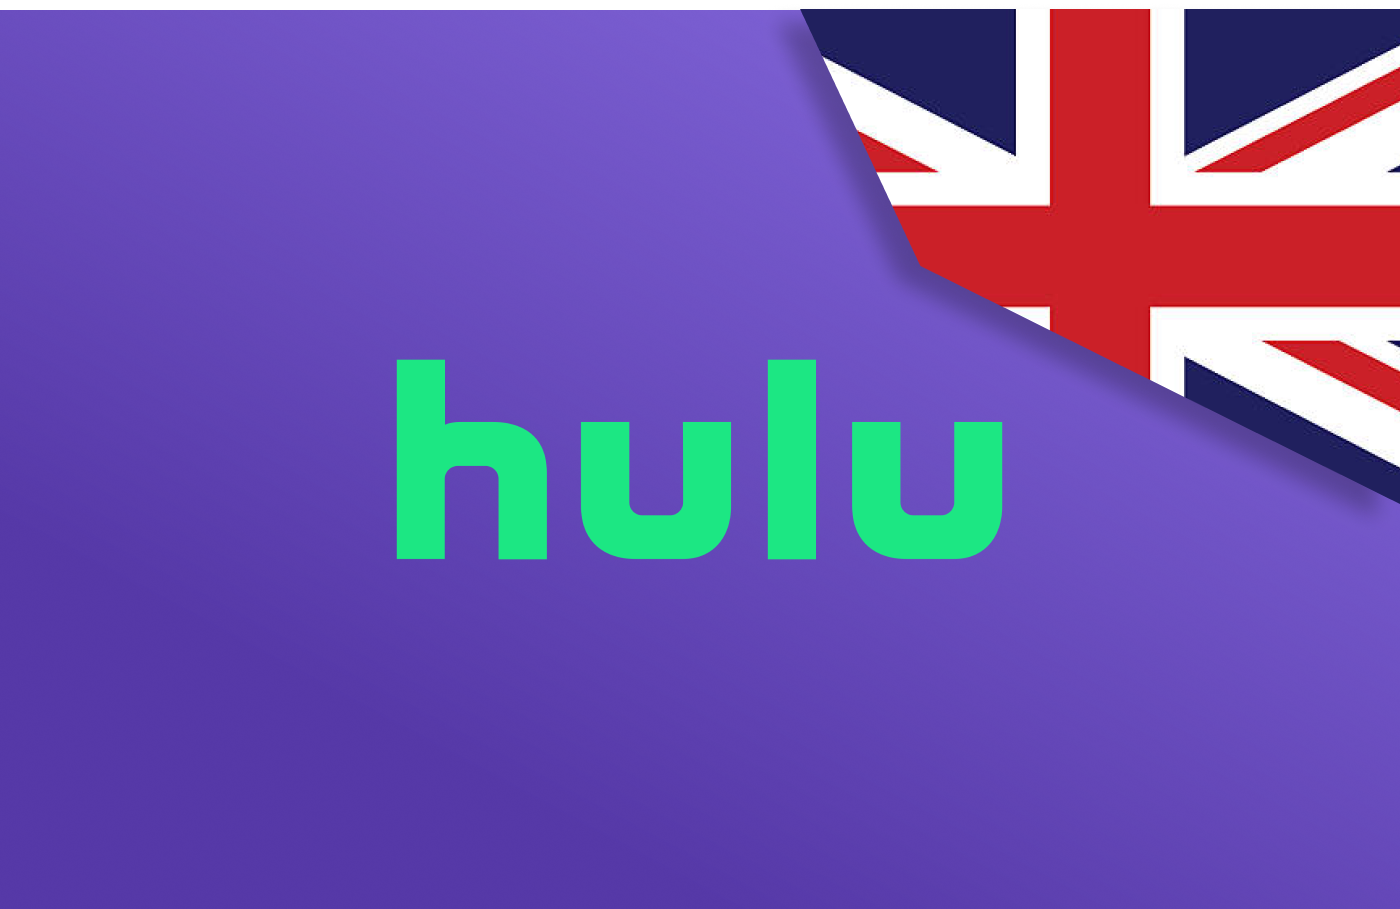 Watch Hulu in the UK